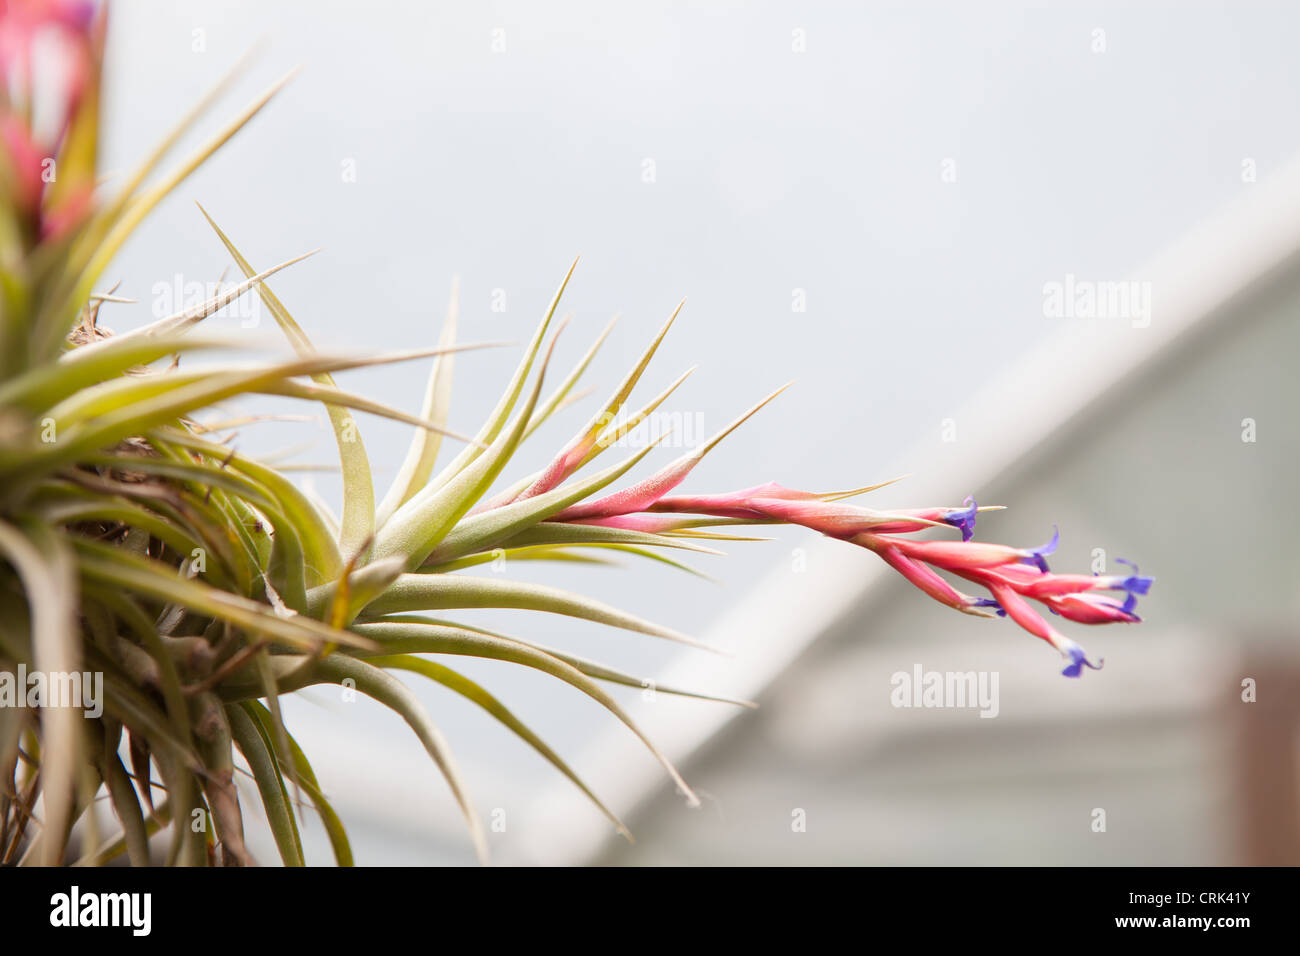 The flowering Tillandsia - Bromeliad Stock Photo